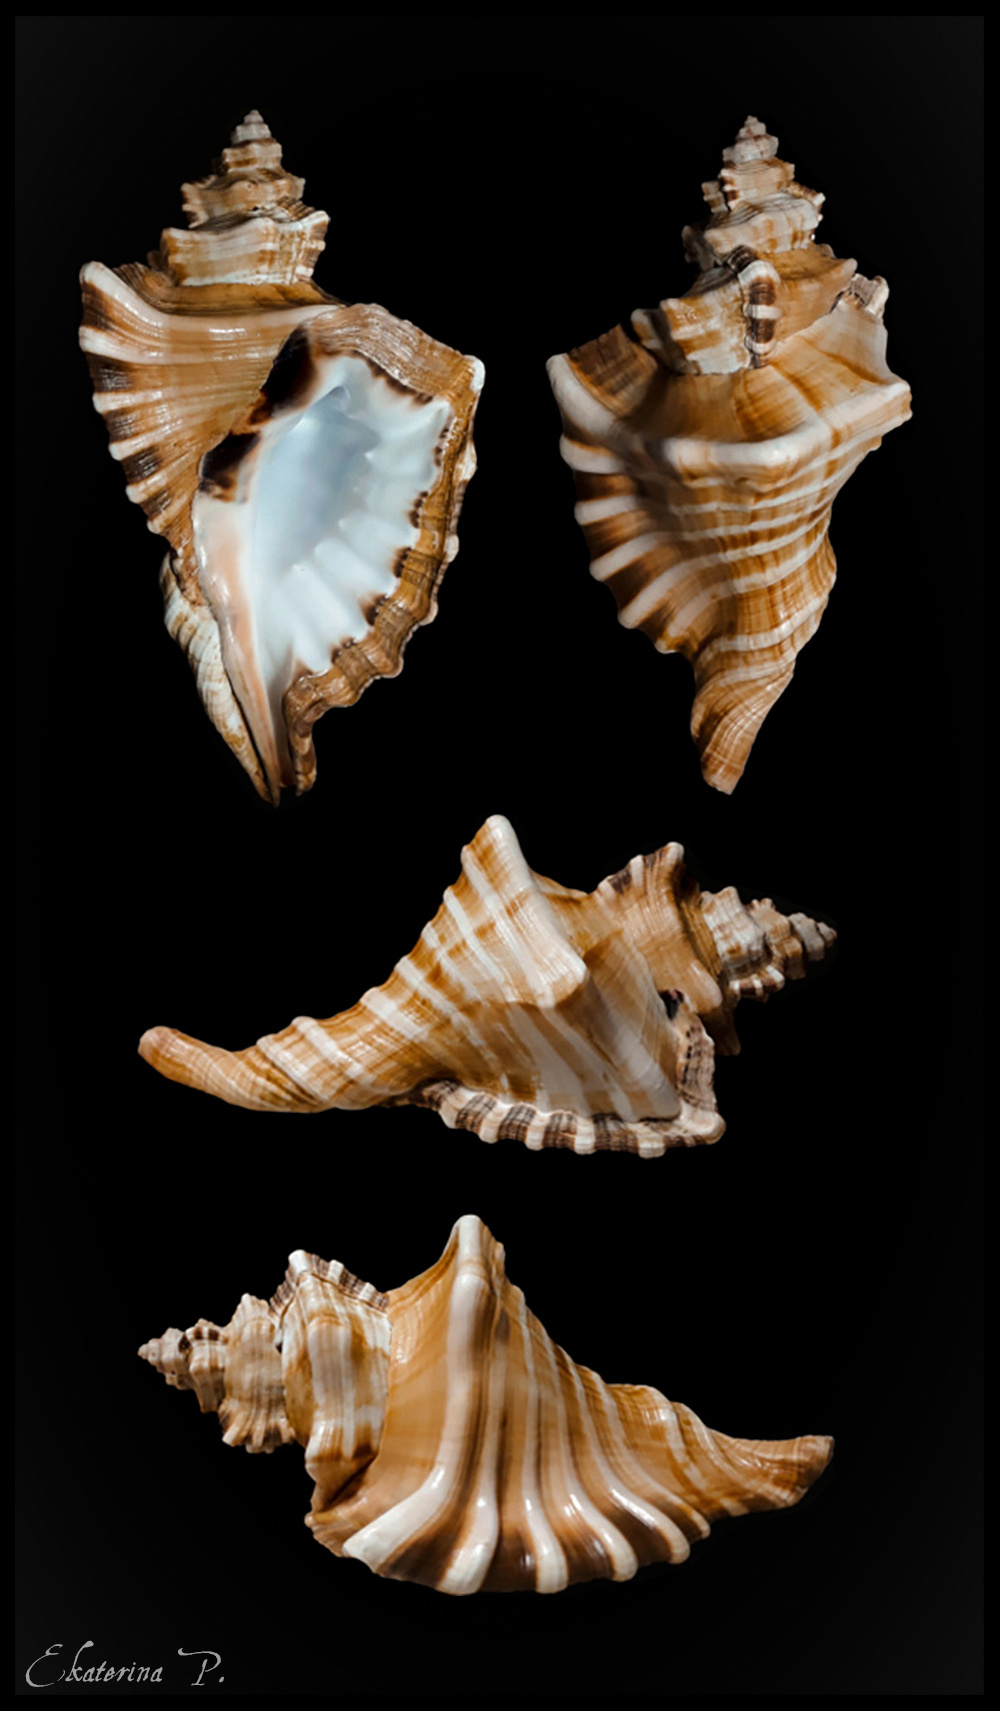 ranzanii - Cymatiidae Cymatium ranzanii (Bianconi, 1850)  Cymati14